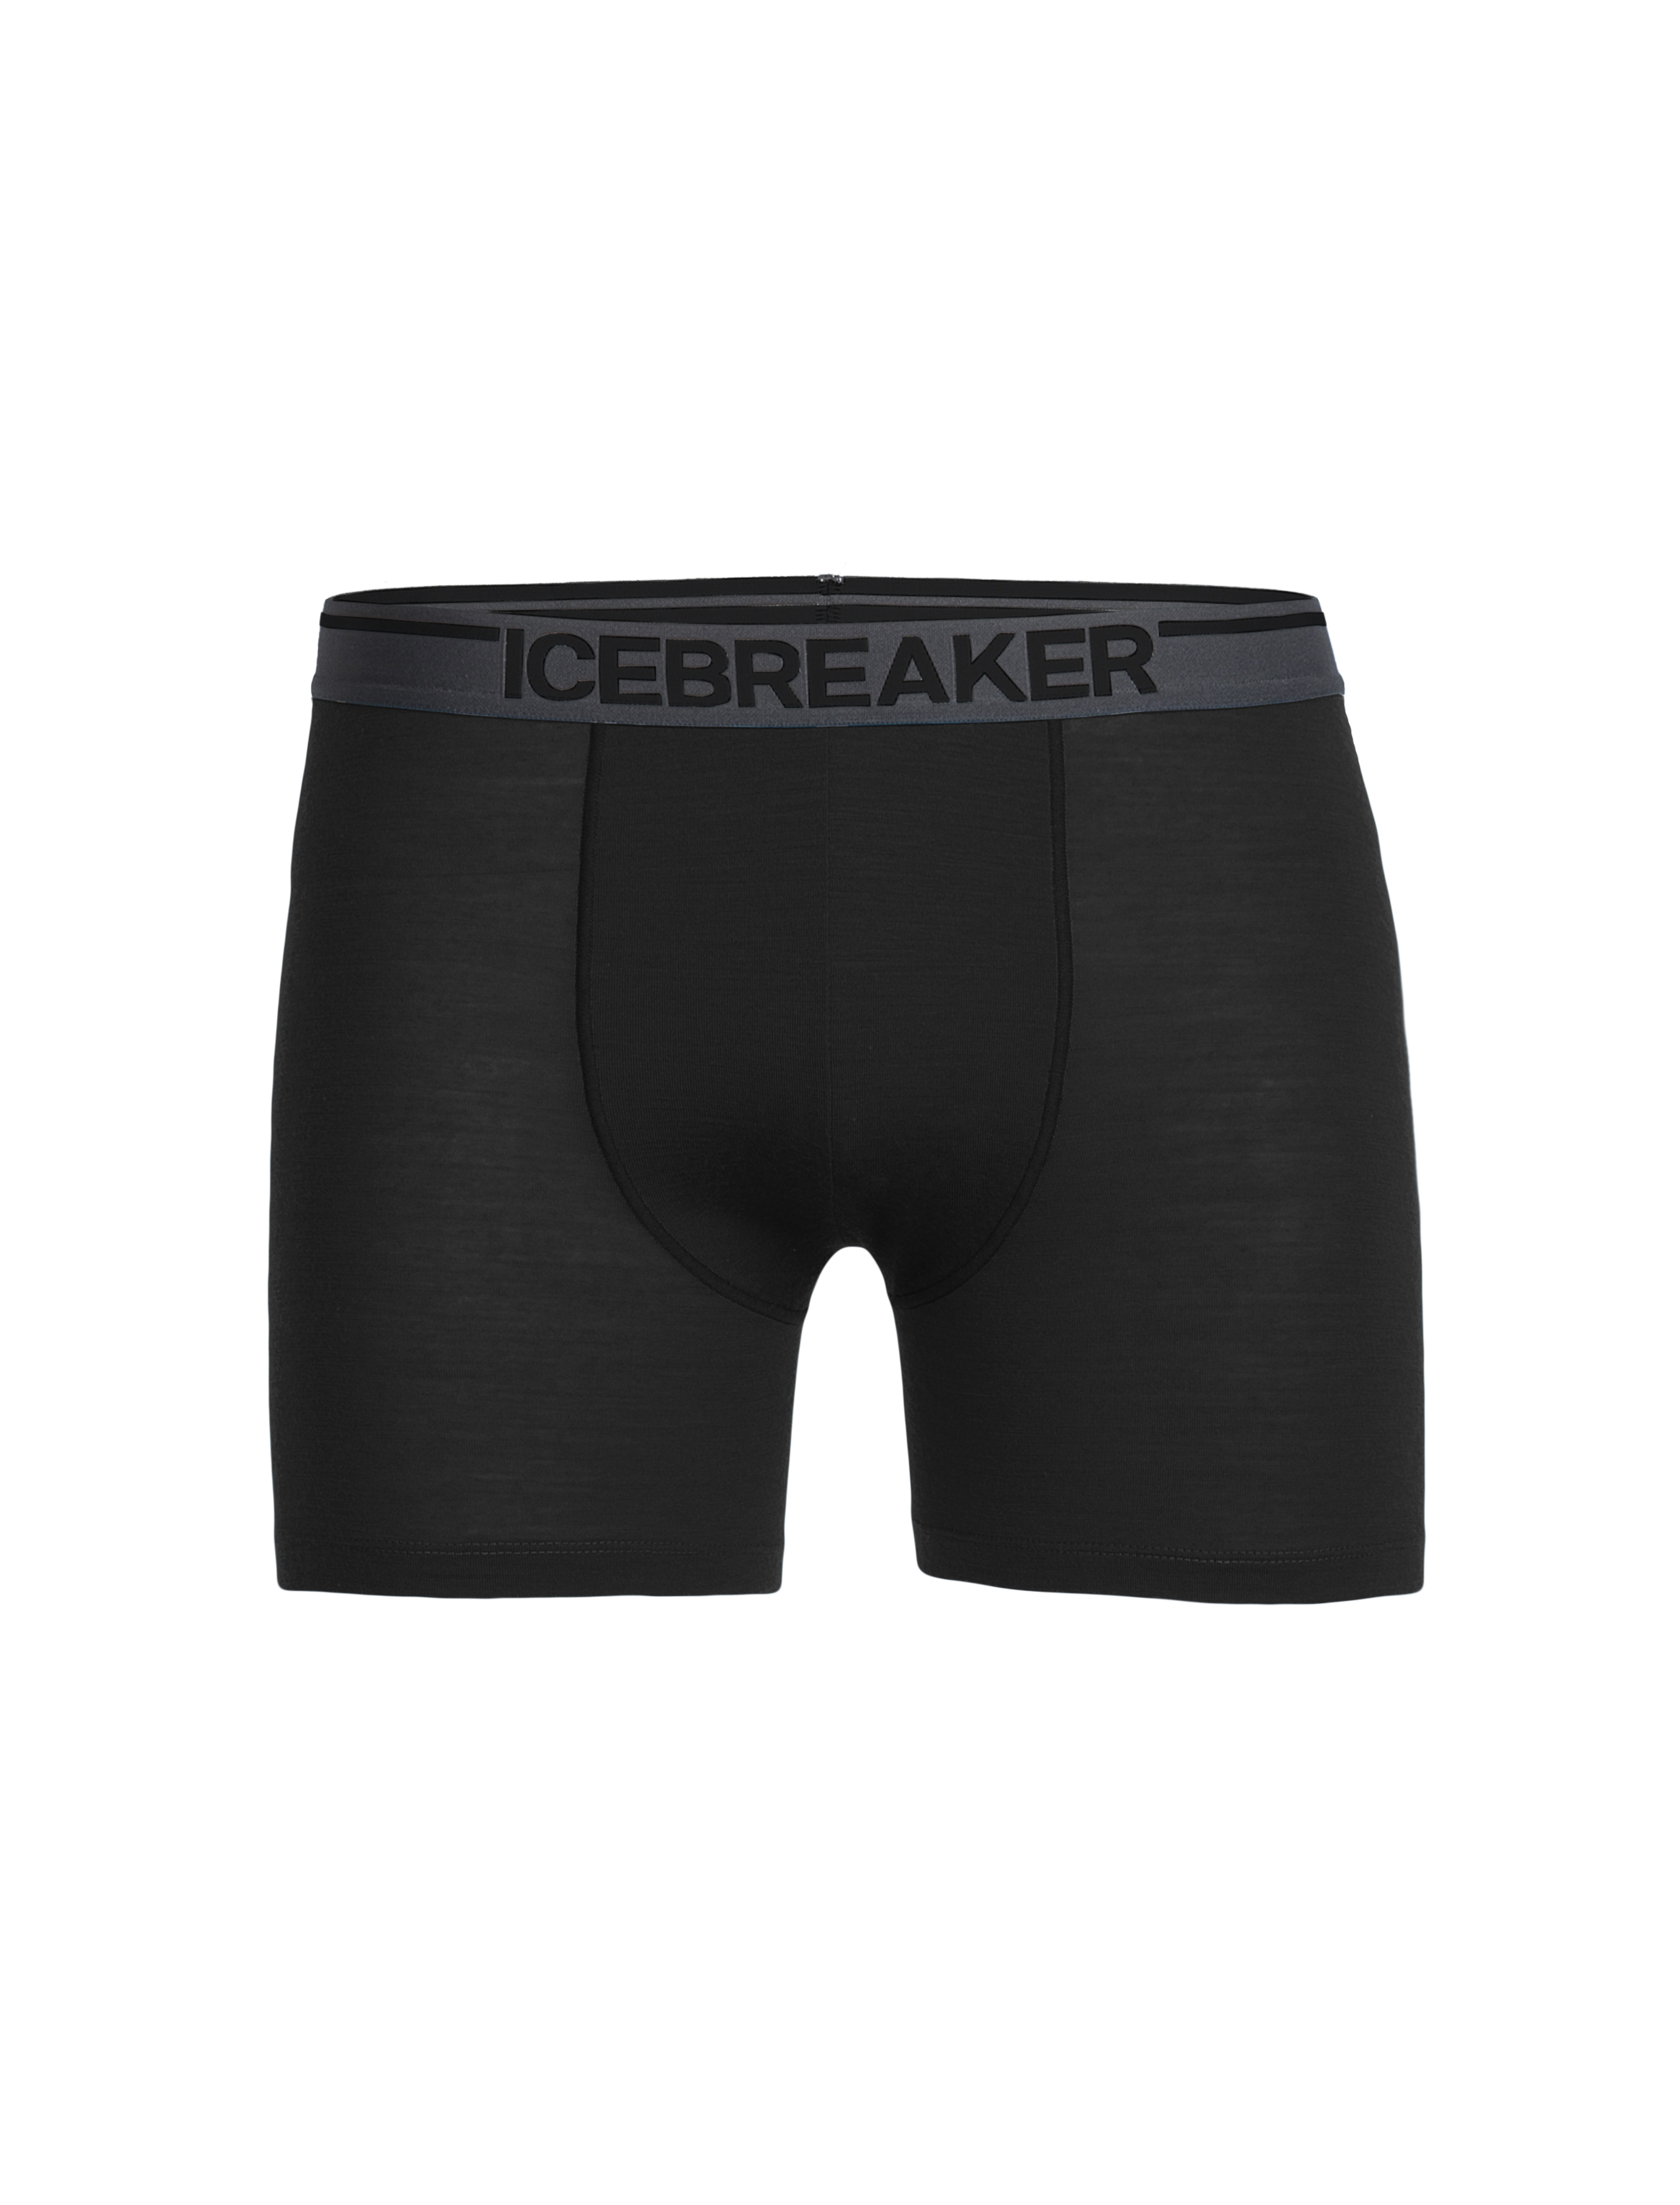 Icebreaker "Mens Anatomica Boxers" - black